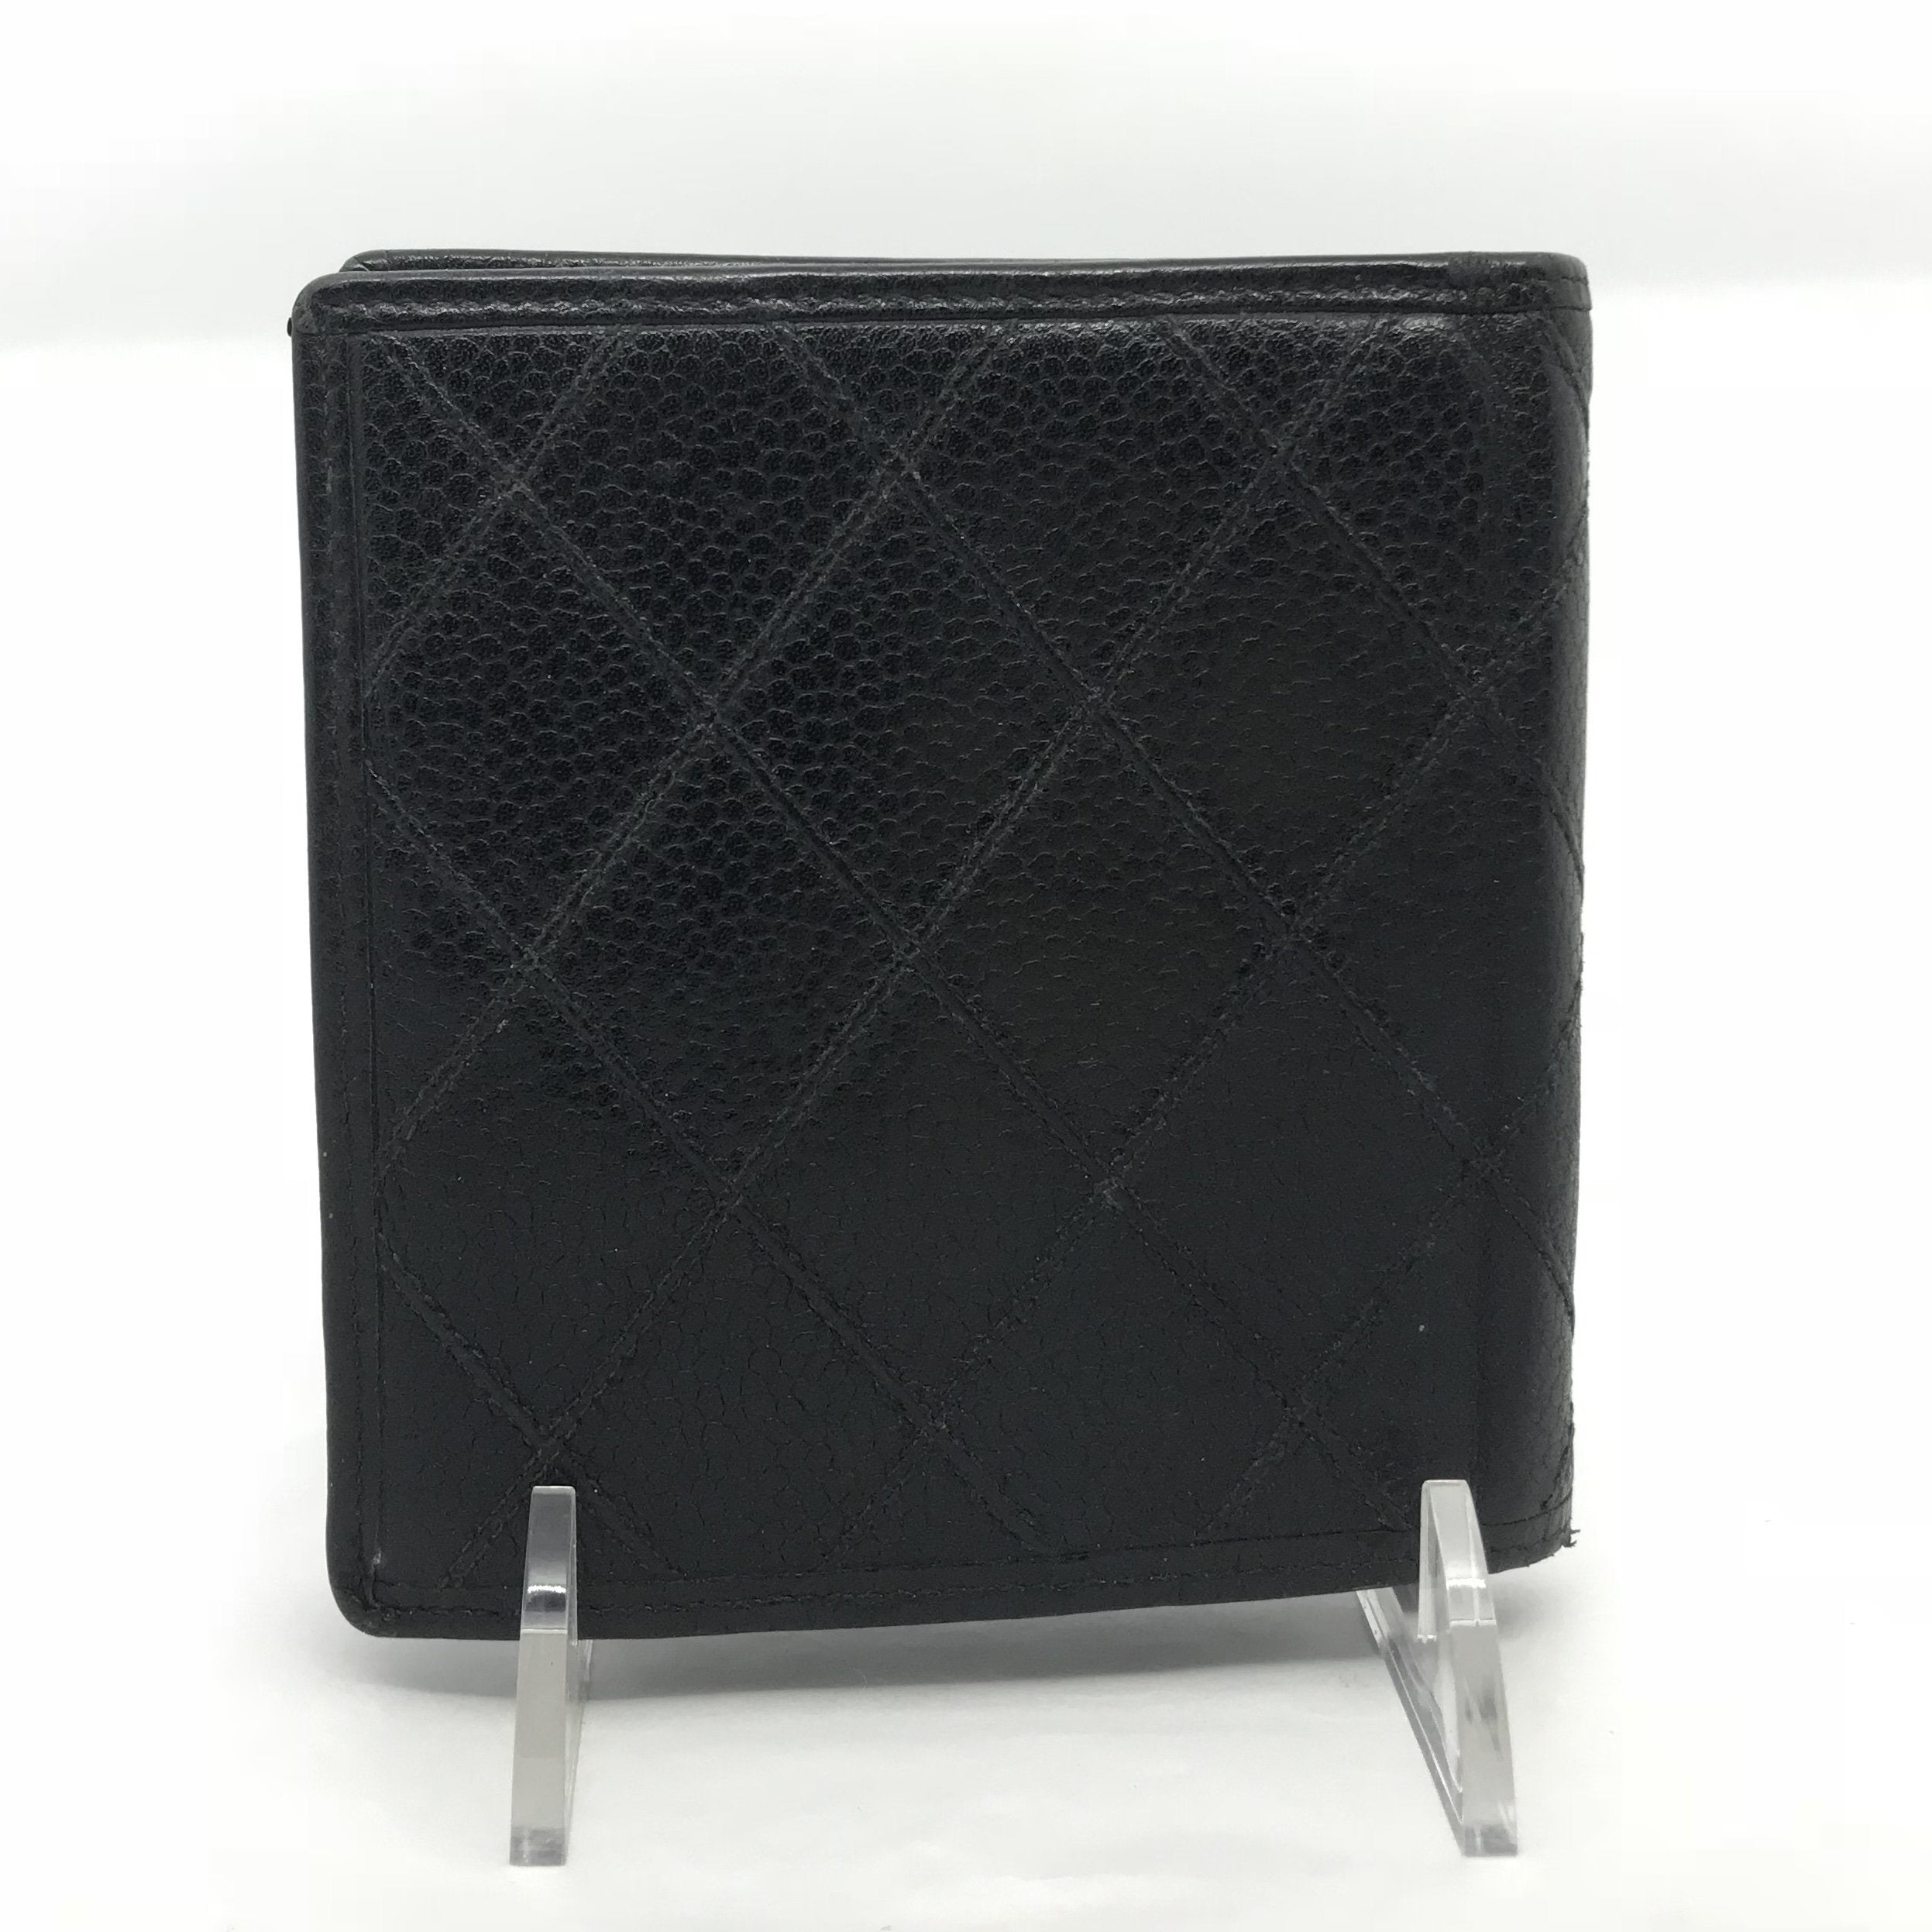 Chanel Vintage Chanel Black Leather Bifold Card Case